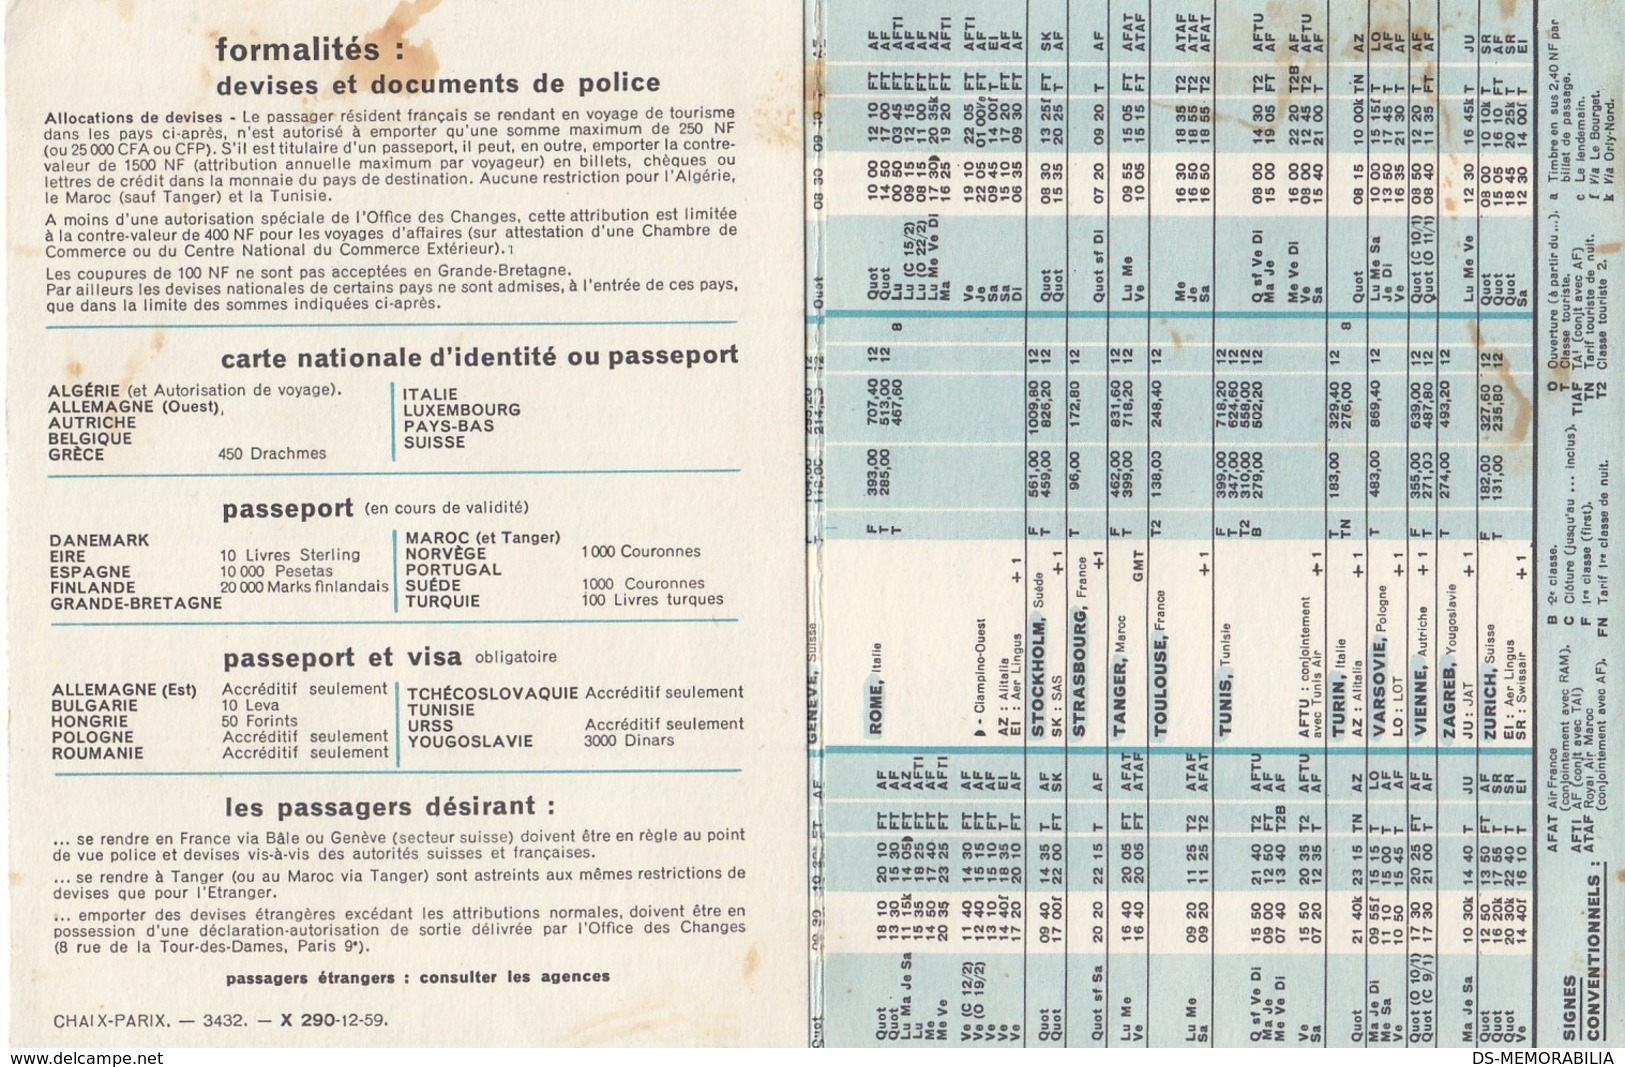 Air France Timetable 1960 Europe Alger Maroc Tunis Paris Airport - Horaires